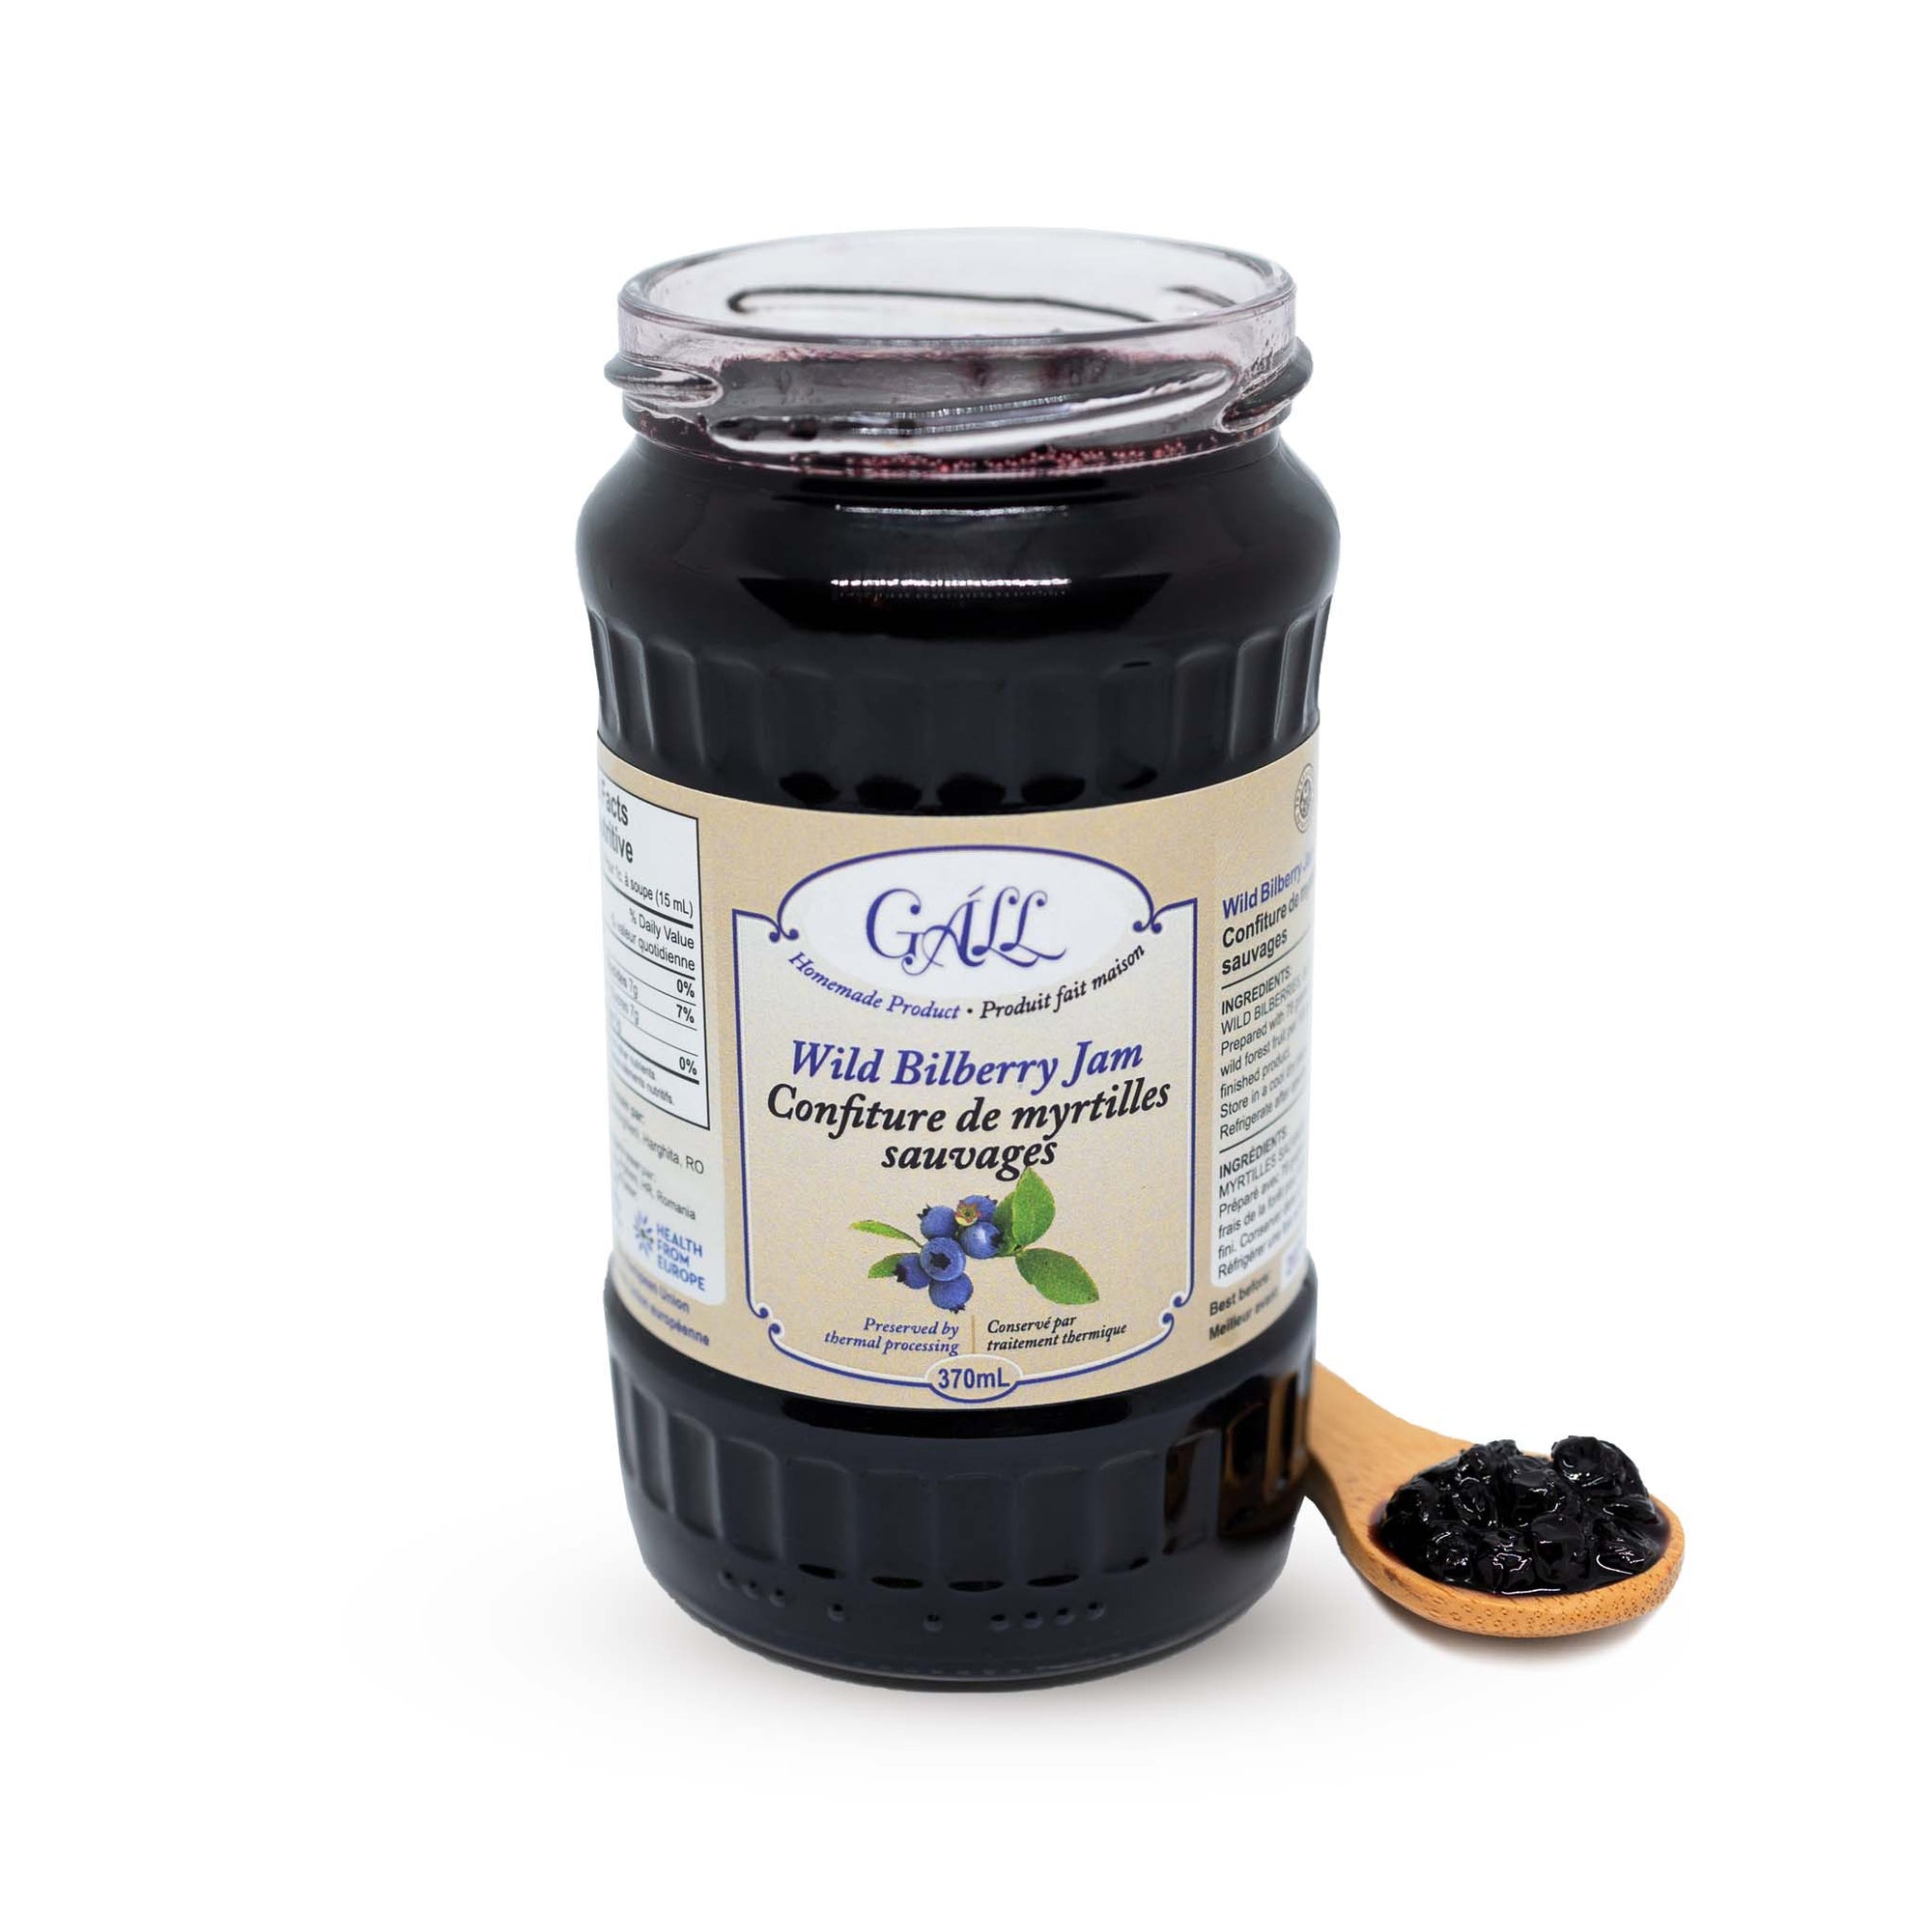 Artisanal Wild Bilberry Jam jar Health from Europe